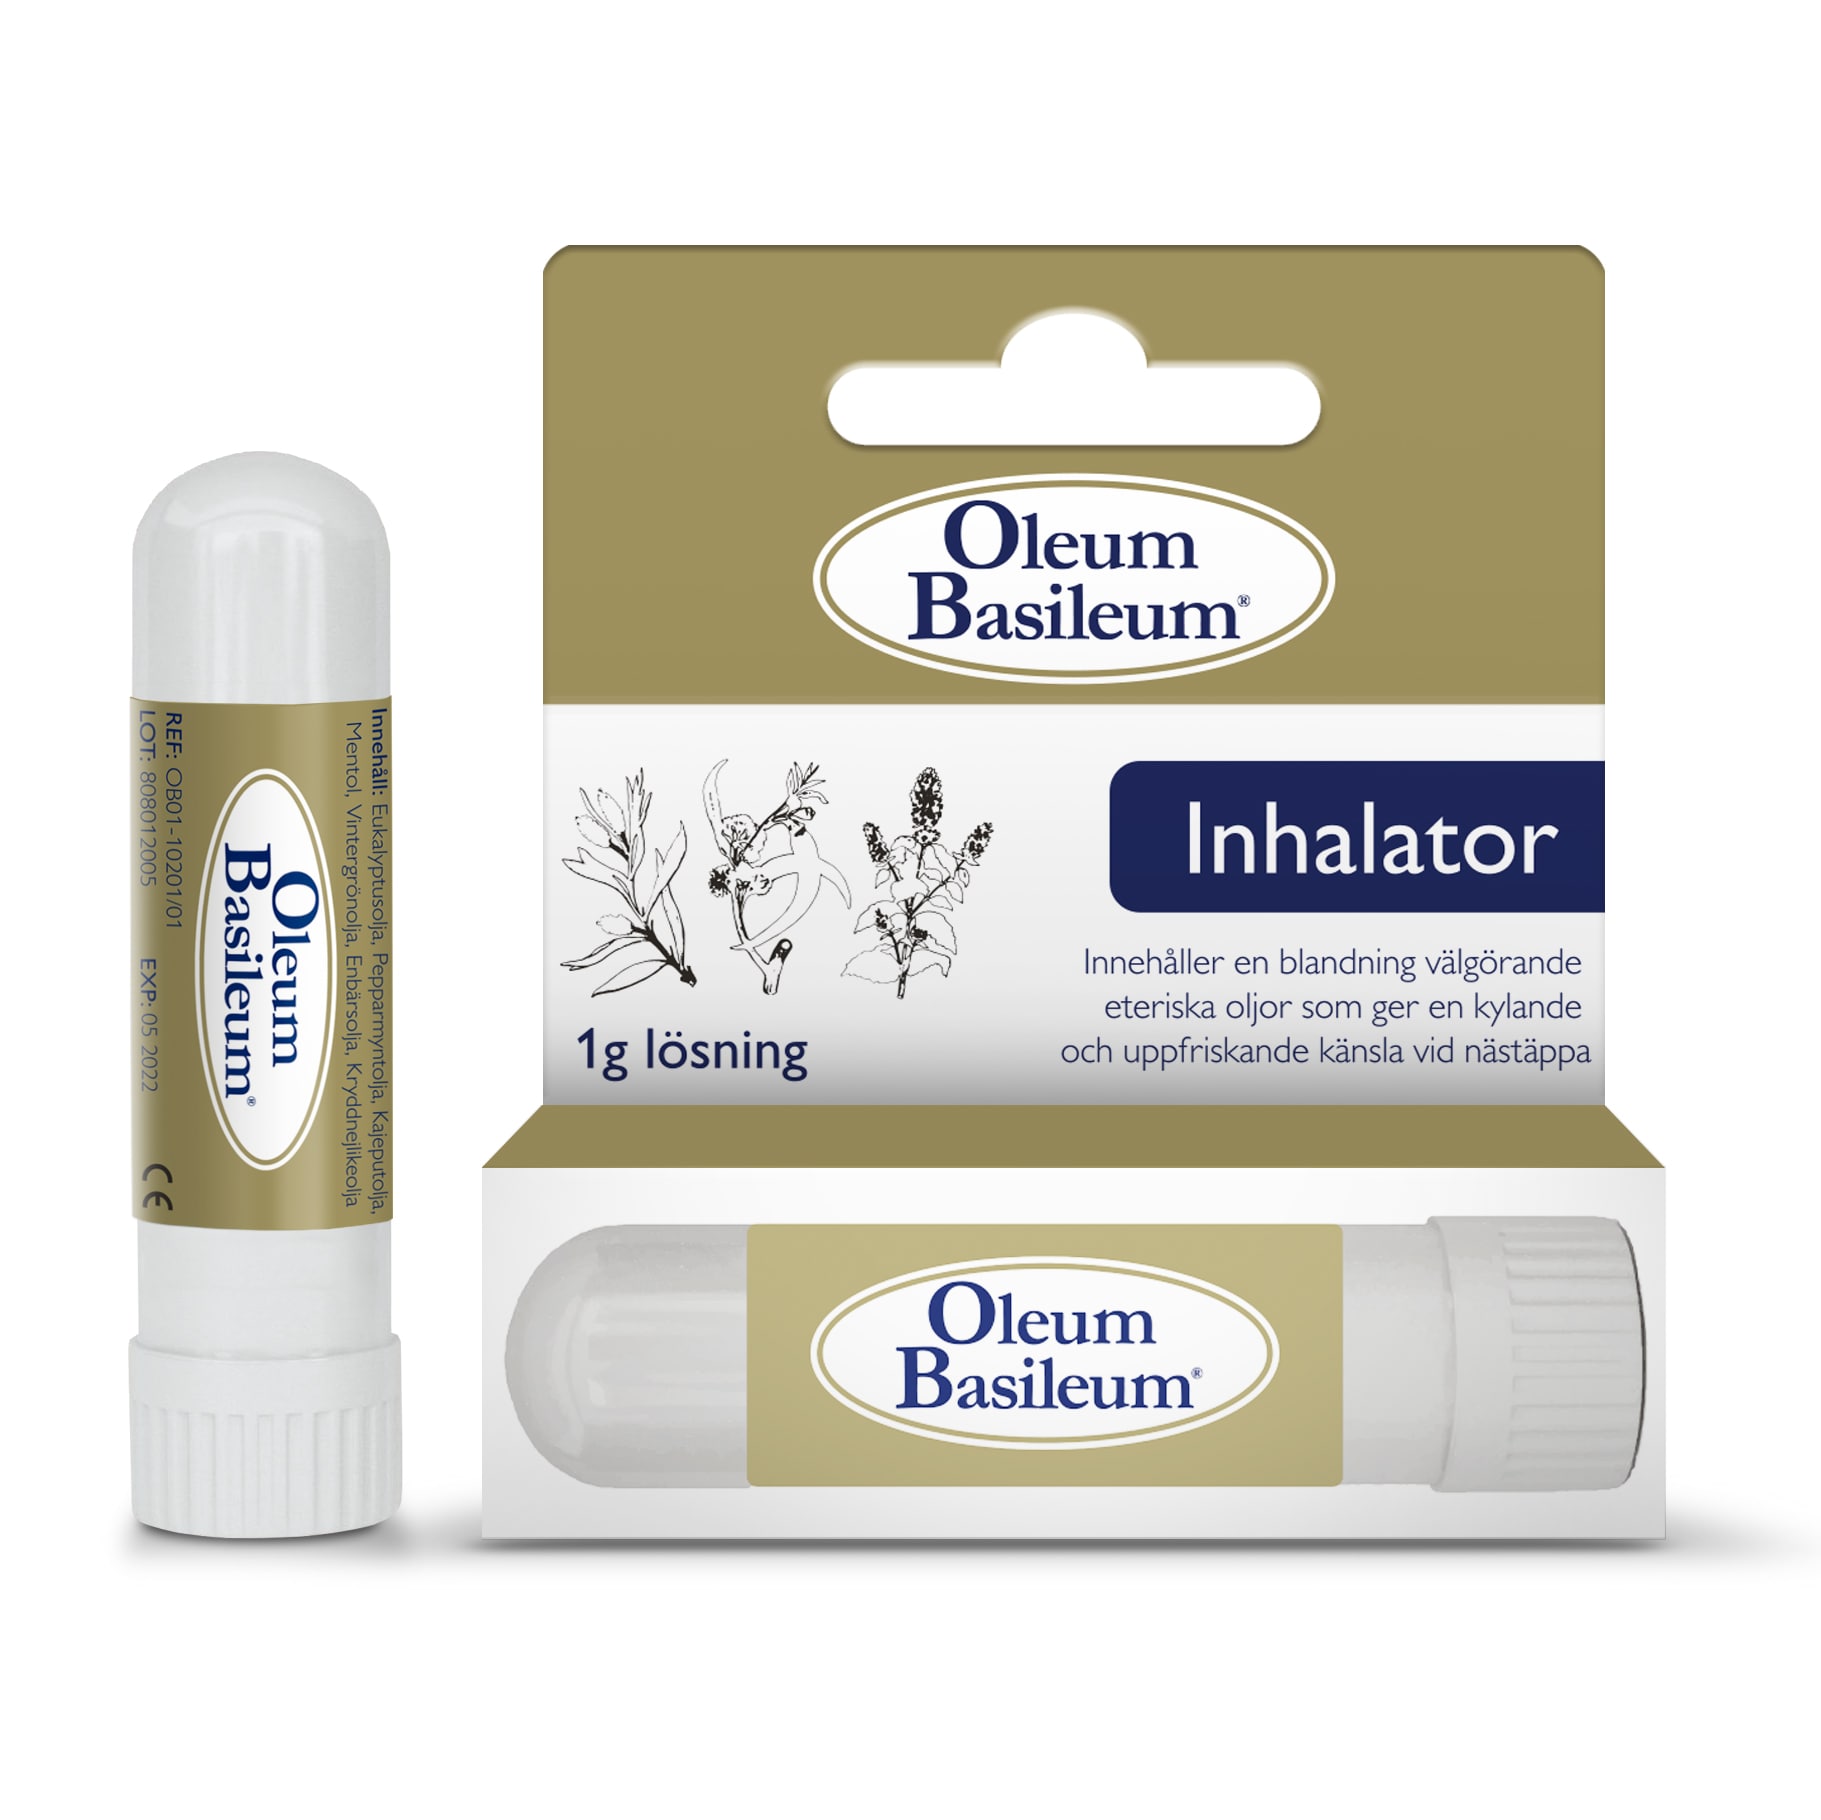 Oleum Basileum inhalator